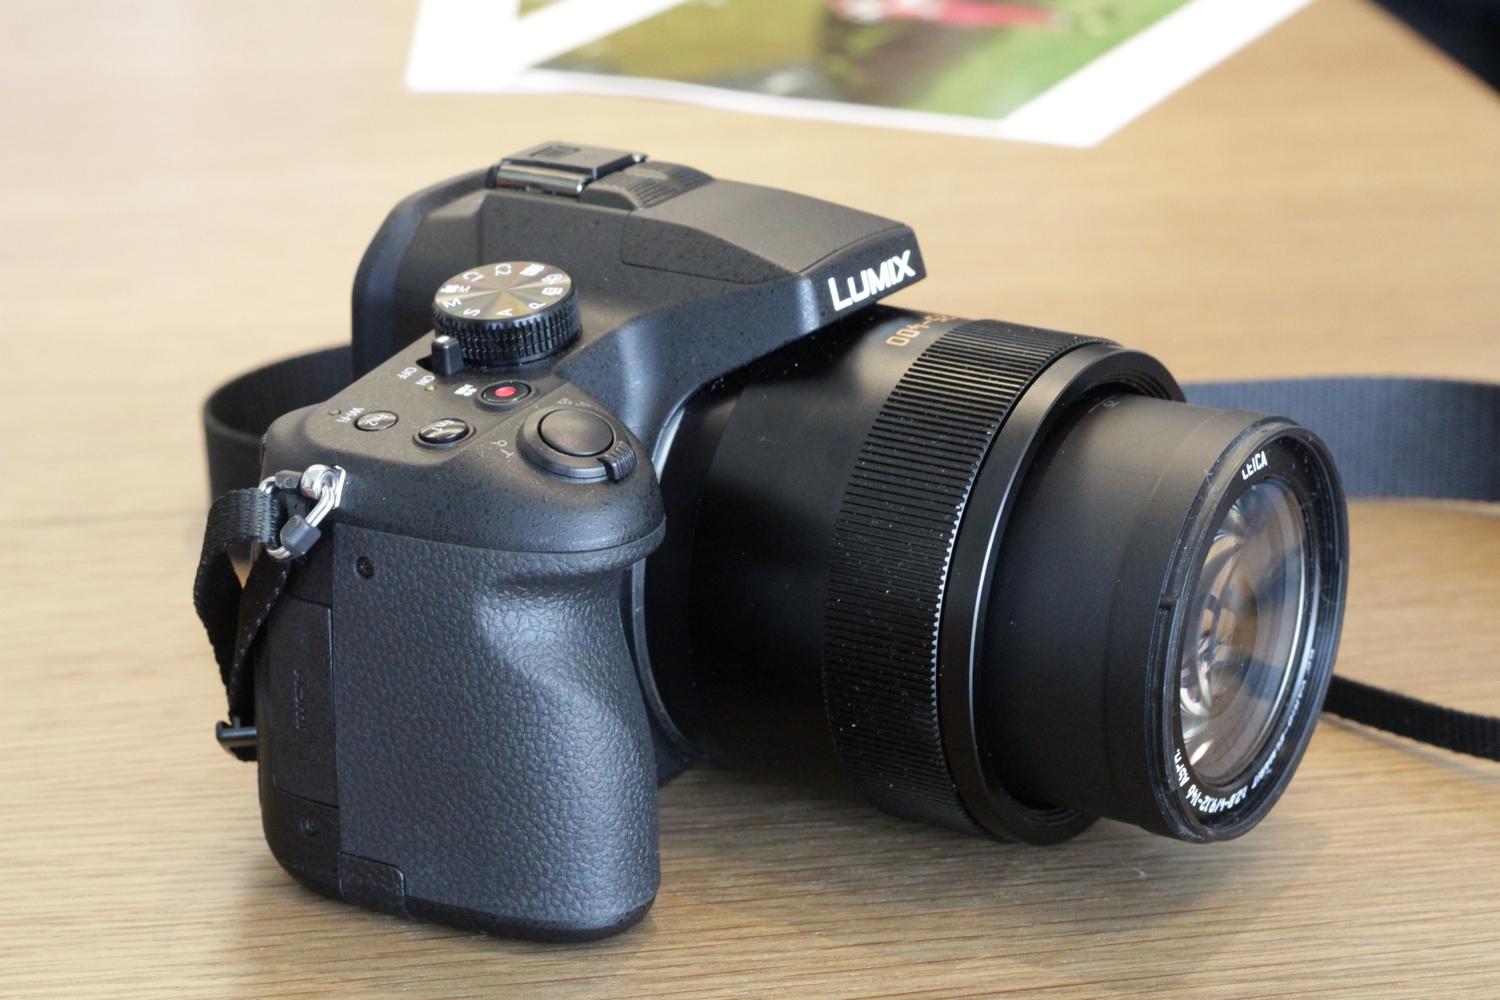 panasonic introduces 4k capable lumix fz1000 bridge camera img 1313